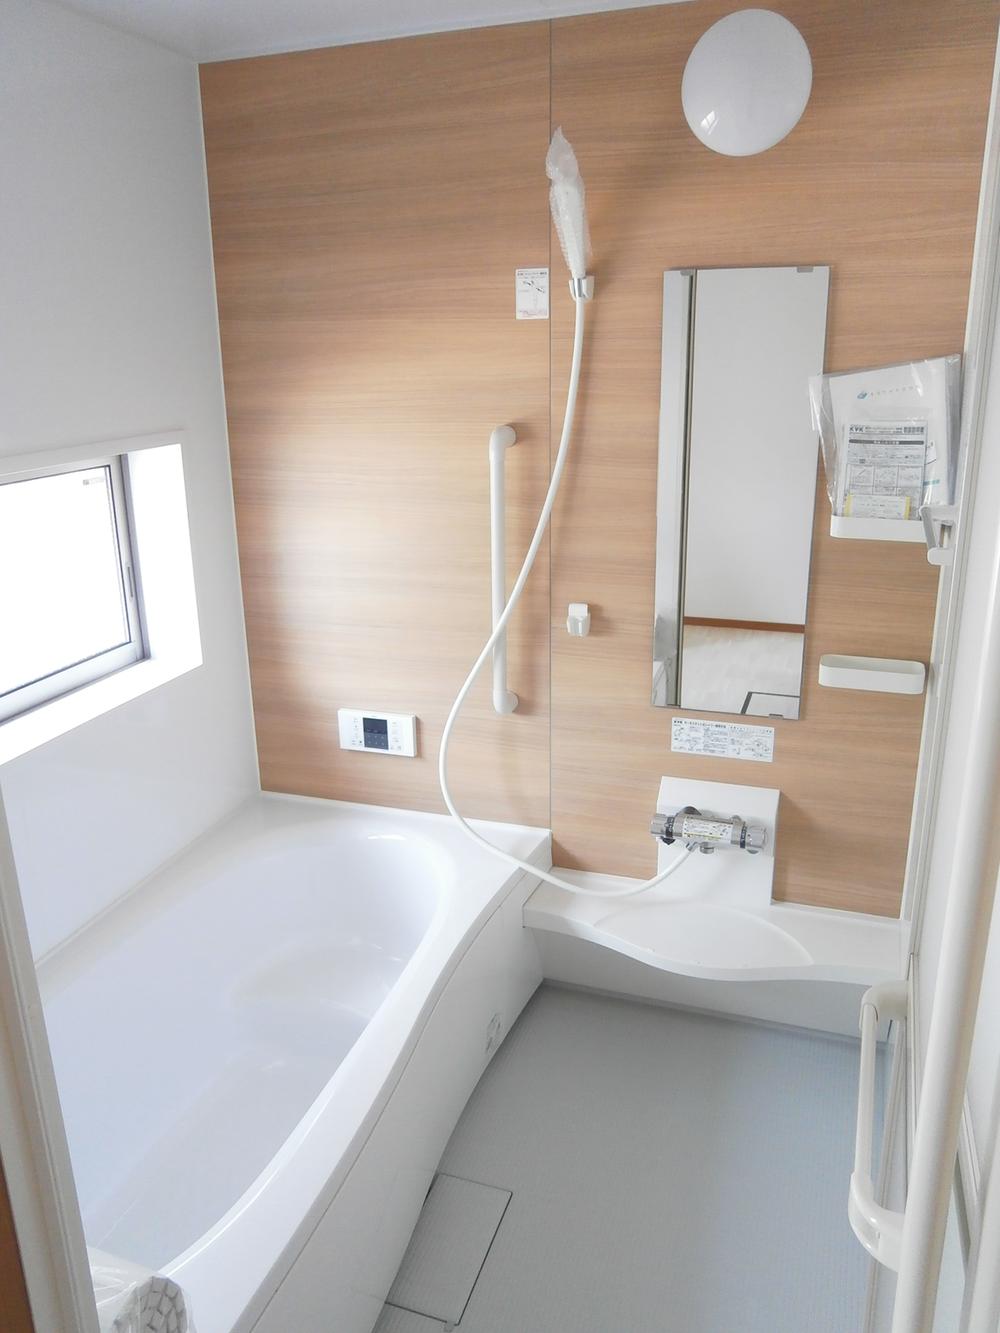 Building plan example (introspection photo). Same specification bathroom photo